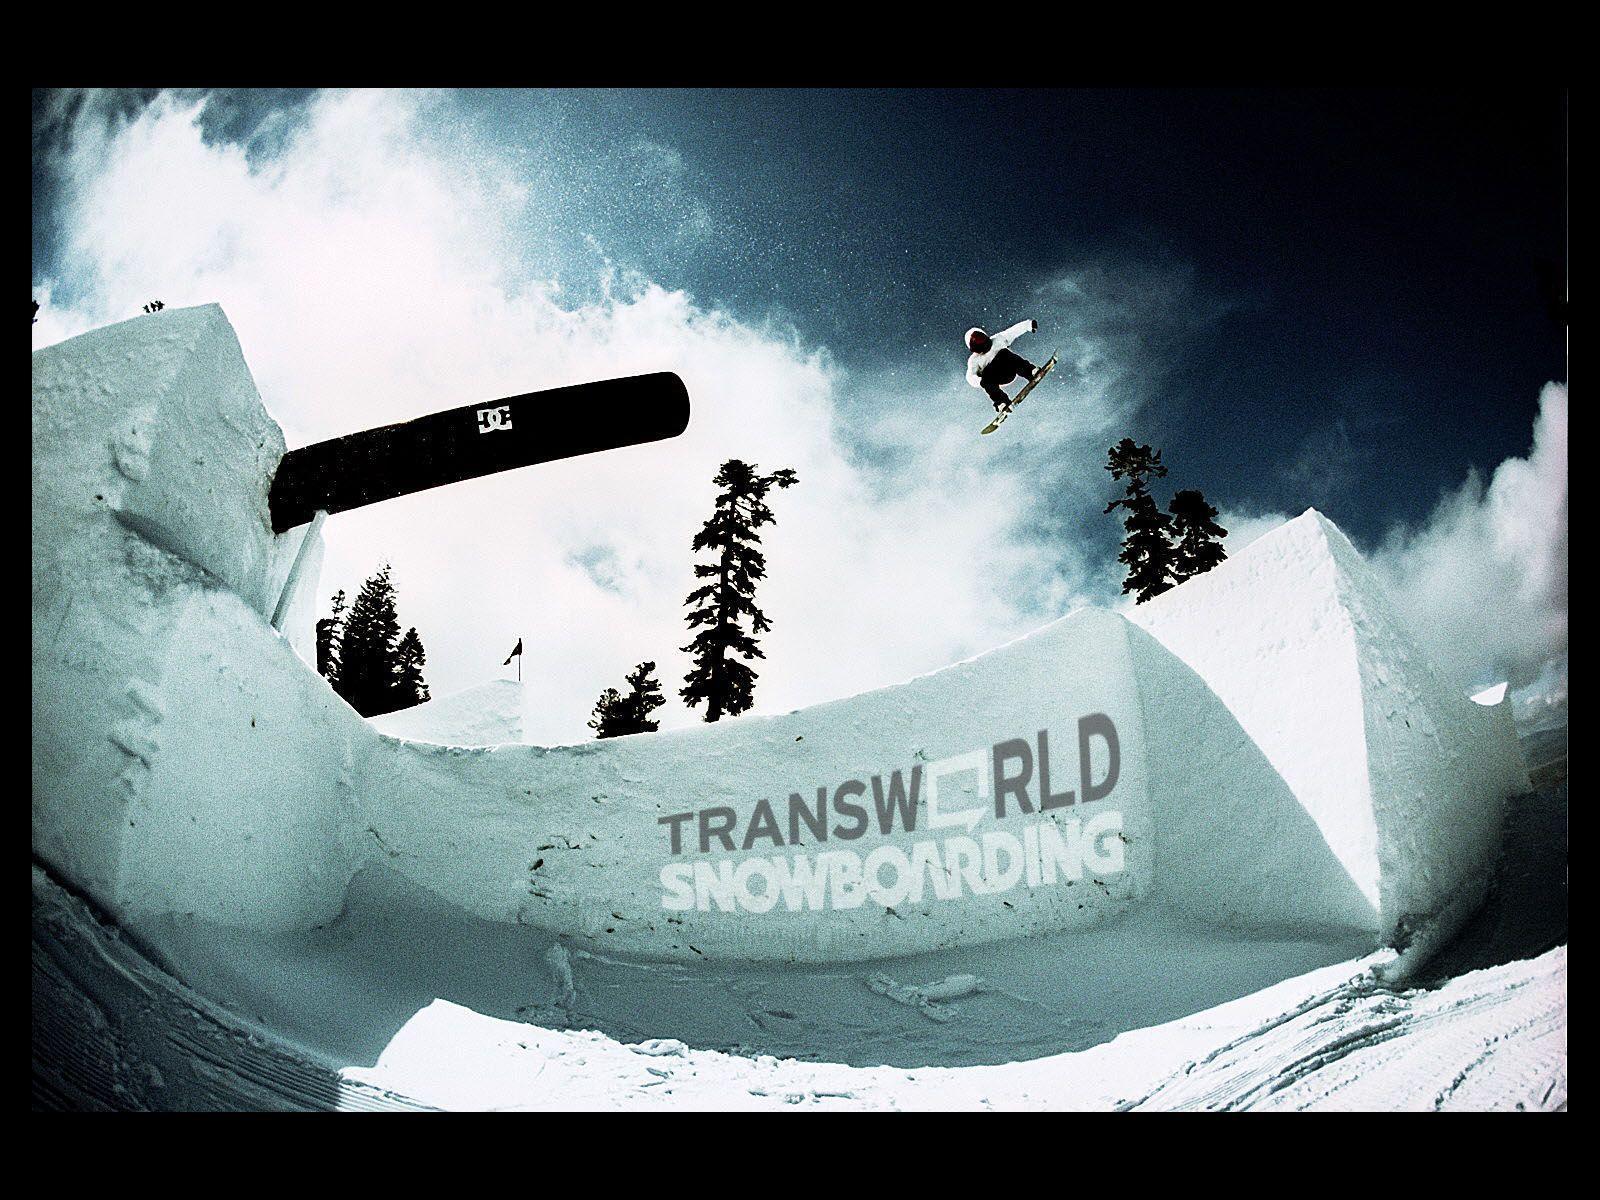 Transworld Snowboarding Wallpaper HD Image 24401 Label: hd, image